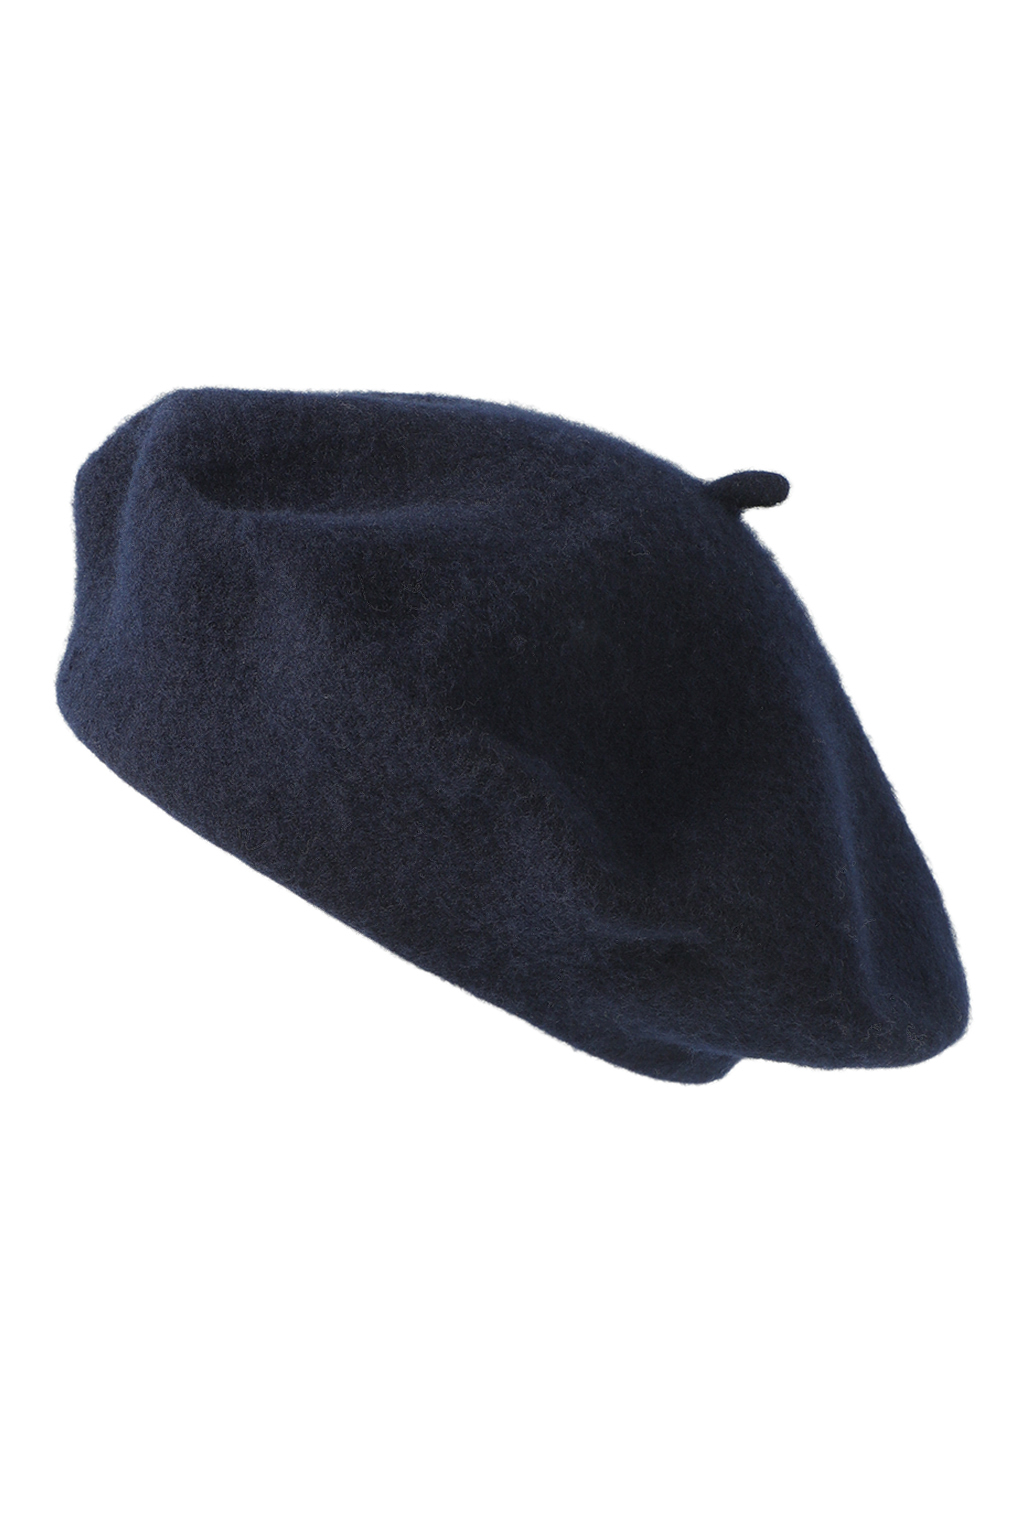 Берет женский Lasessor Wool beret синий, One Size